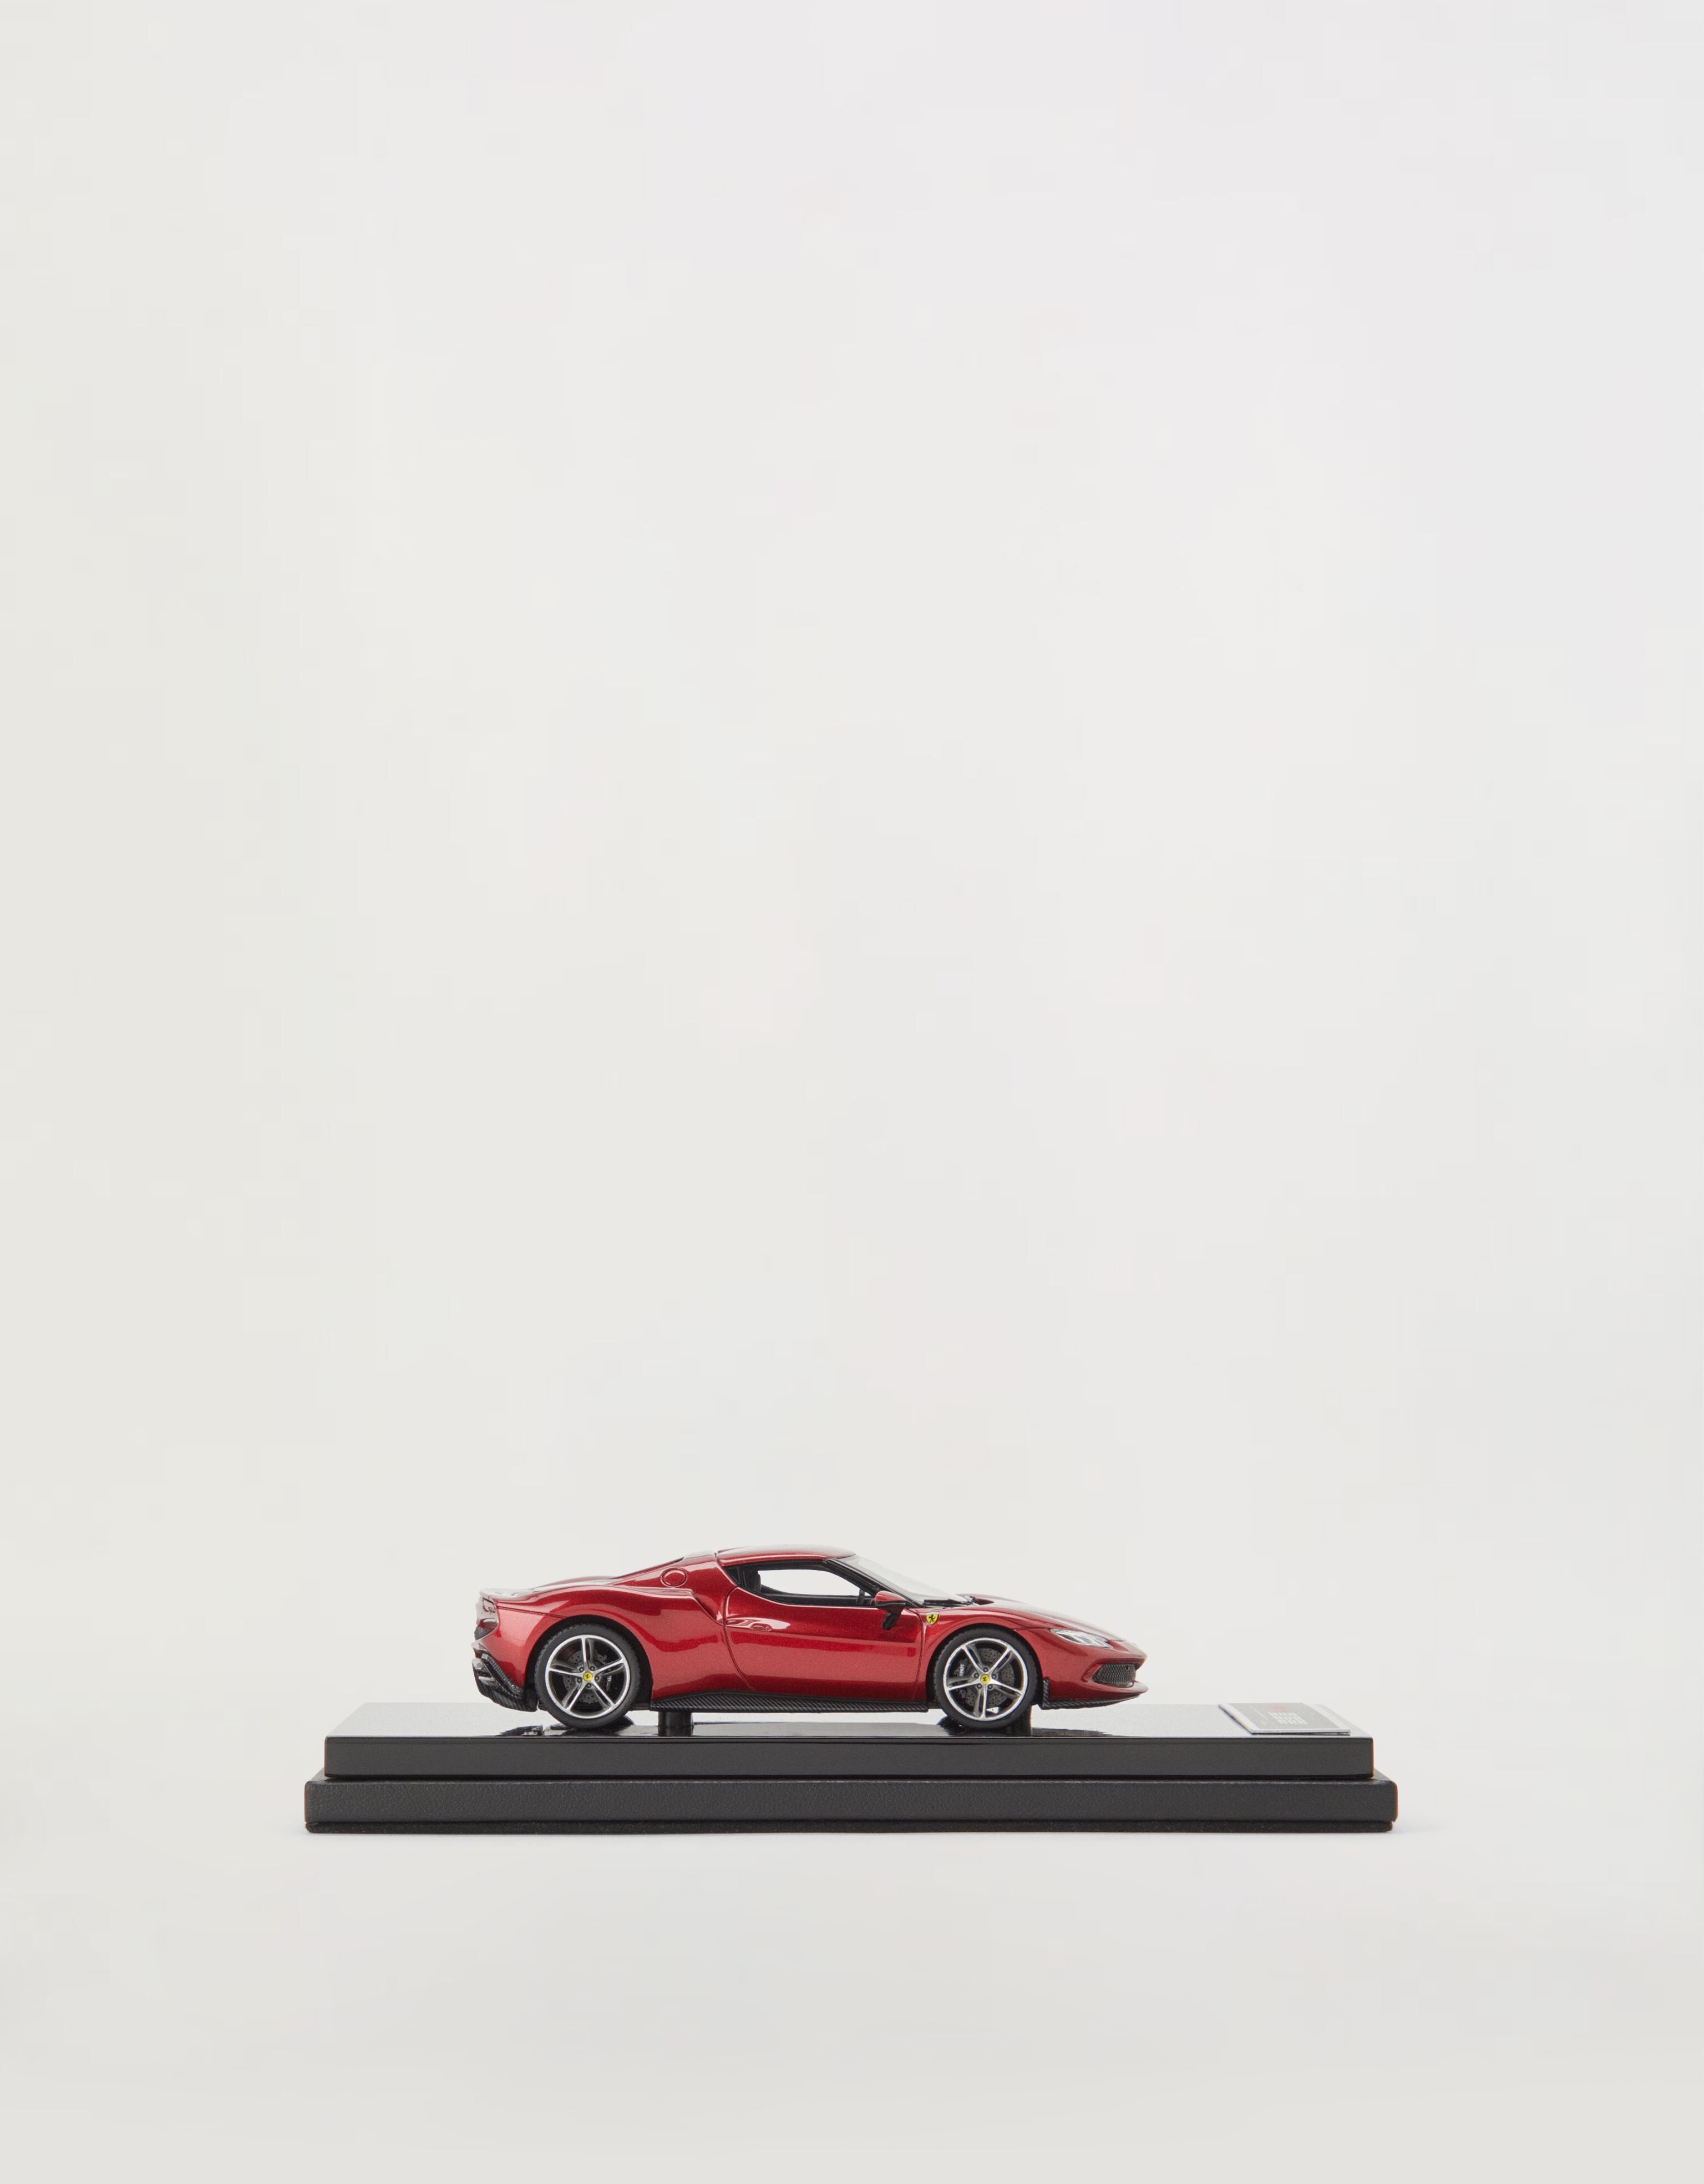 Ferrari Ferrari 296 GTB model in 1:43 scale Rosso Corsa 20168f